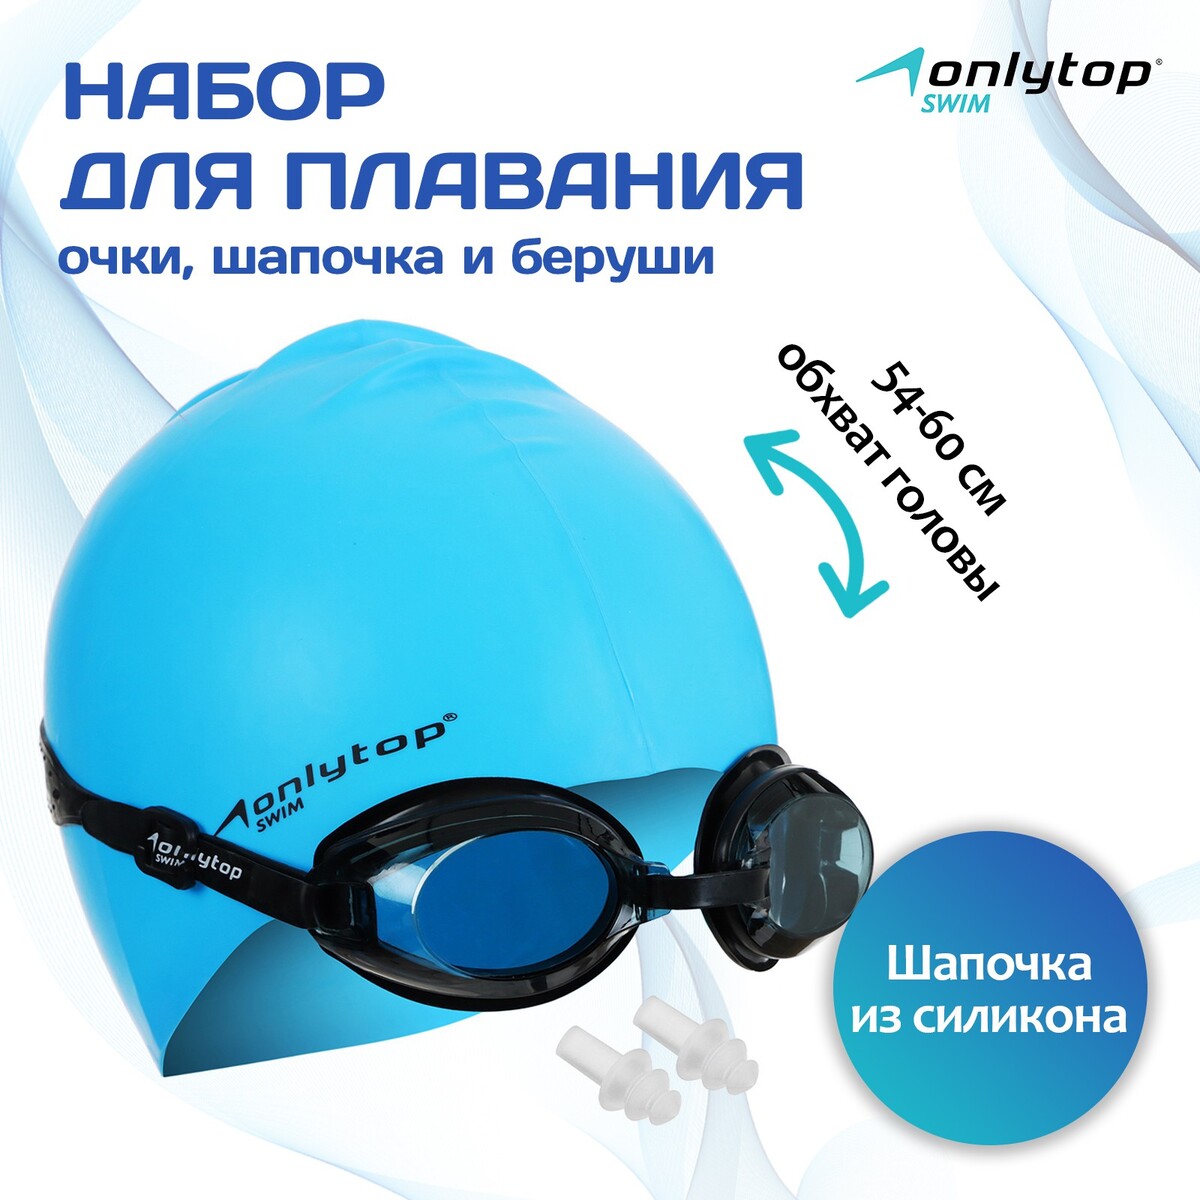 Набор для плавания onlytop: шапочка, очки, беруши набор для плавания взрослый onlitop swim шапочка беруши зажим для носа мешок